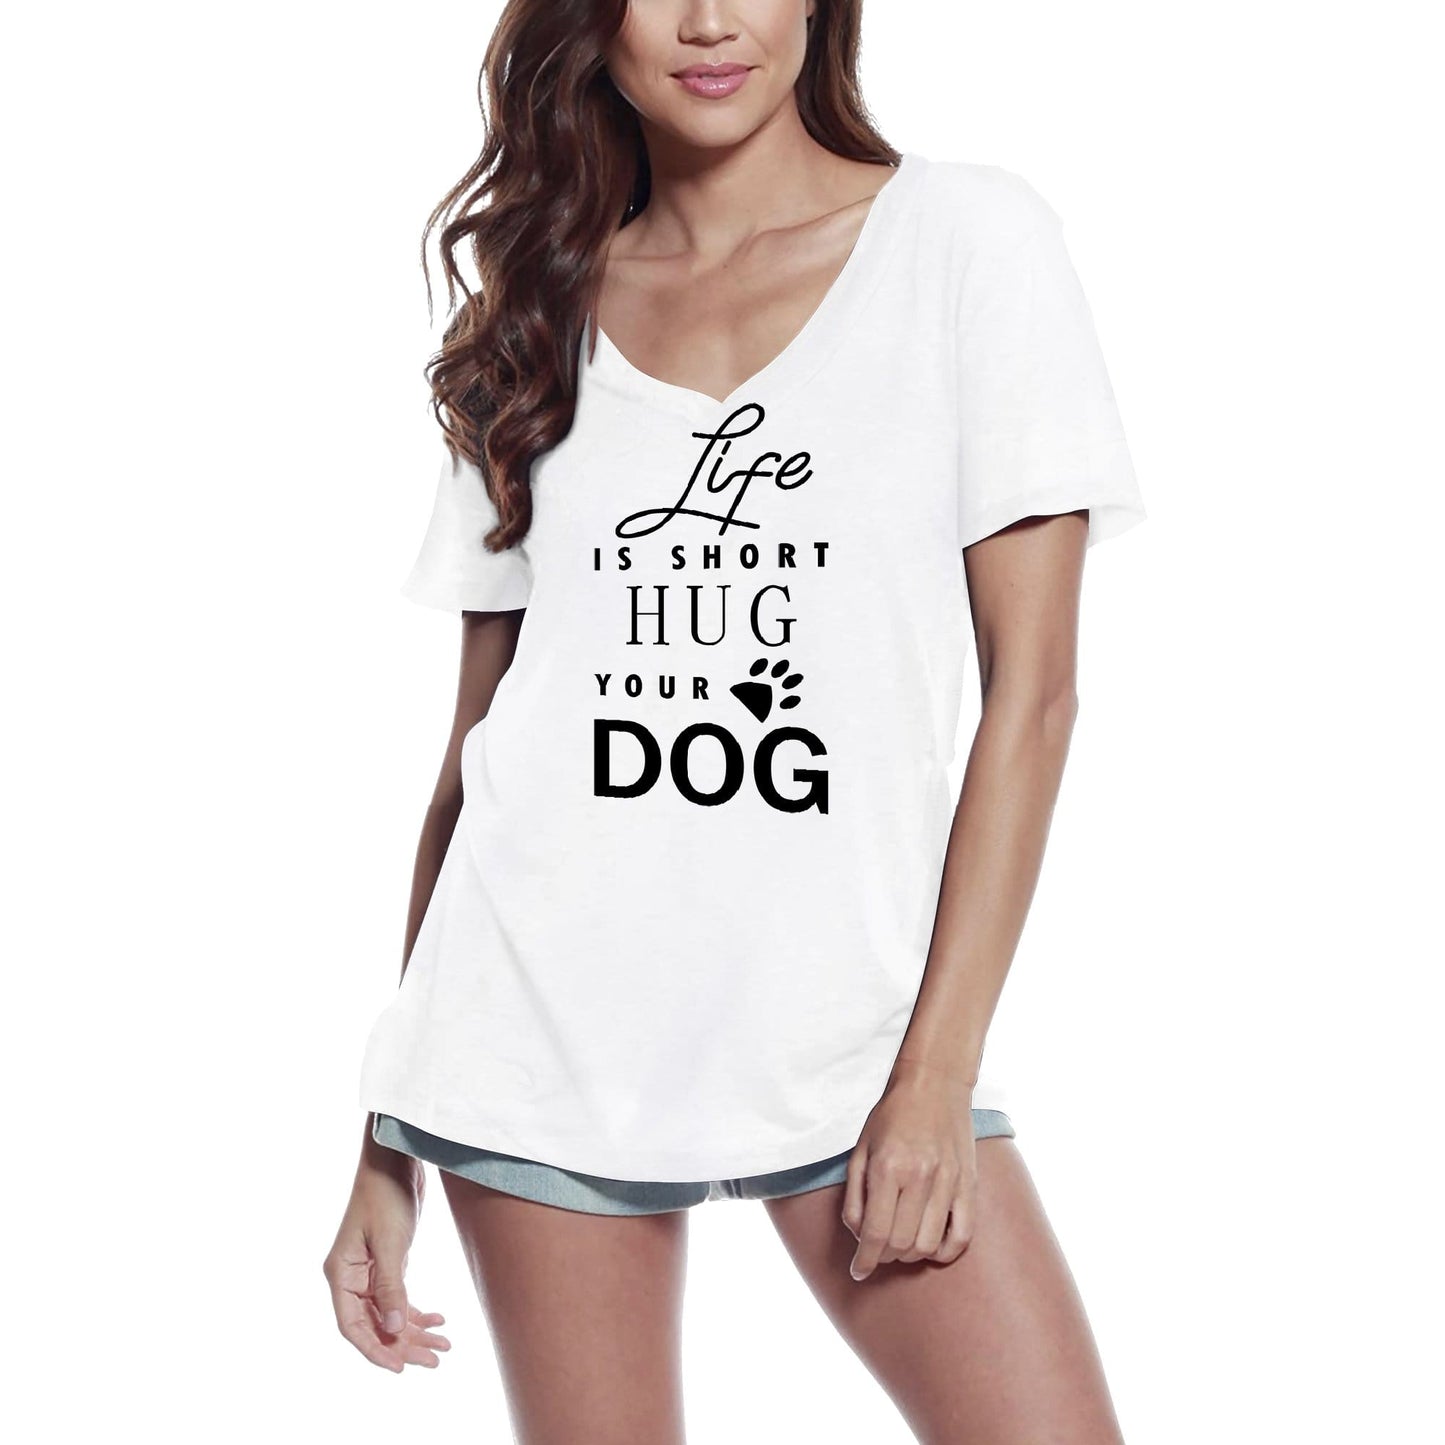 ULTRABASIC Women's T-Shirt Life Is Short Hug Your Dog - Funny Short Sleeve Tee Shirt Tops